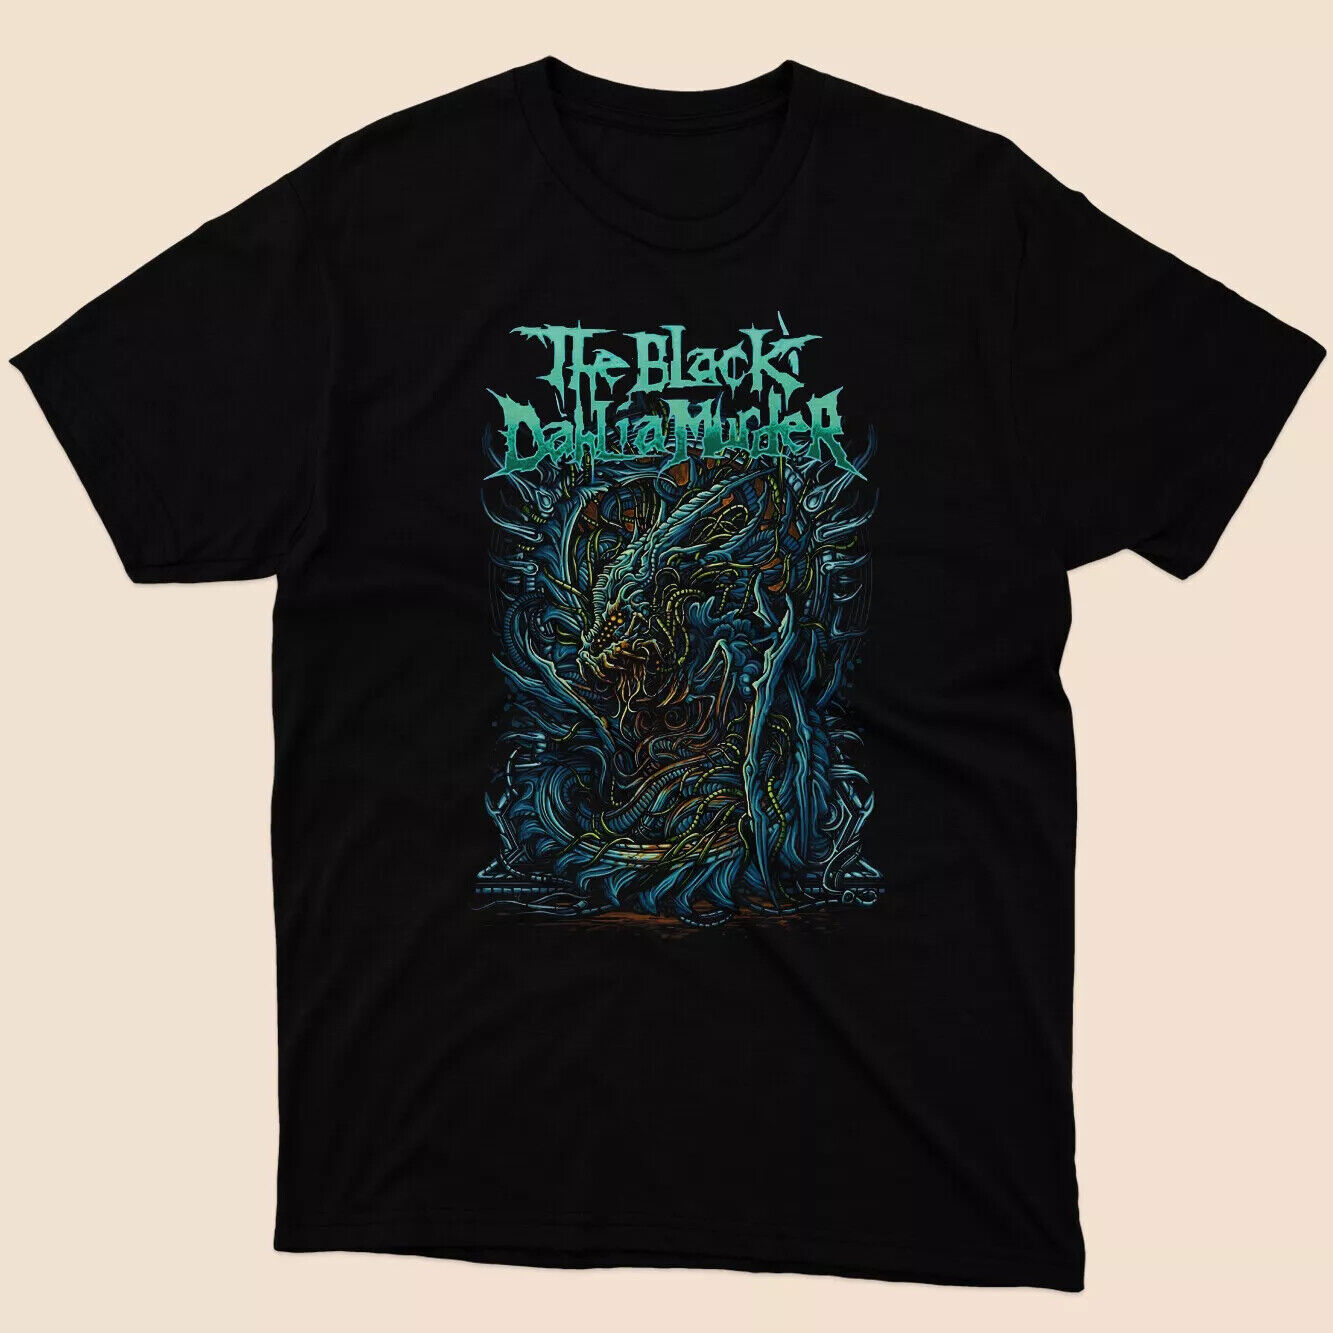 Sale The Black Dahlia Murder American T-Shirt Black S - 5Xl